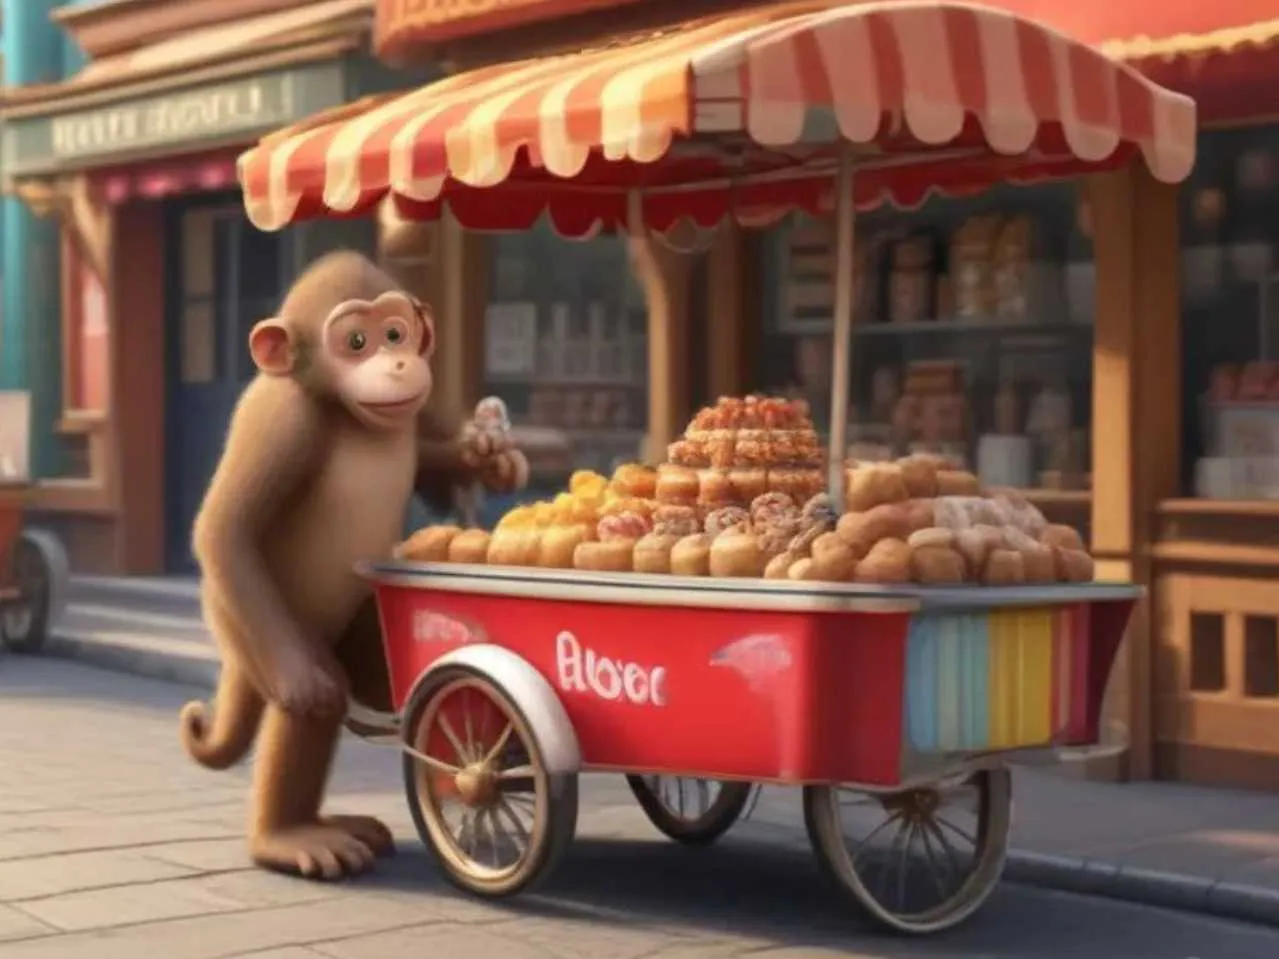 Monkey selling sweets cartoon image